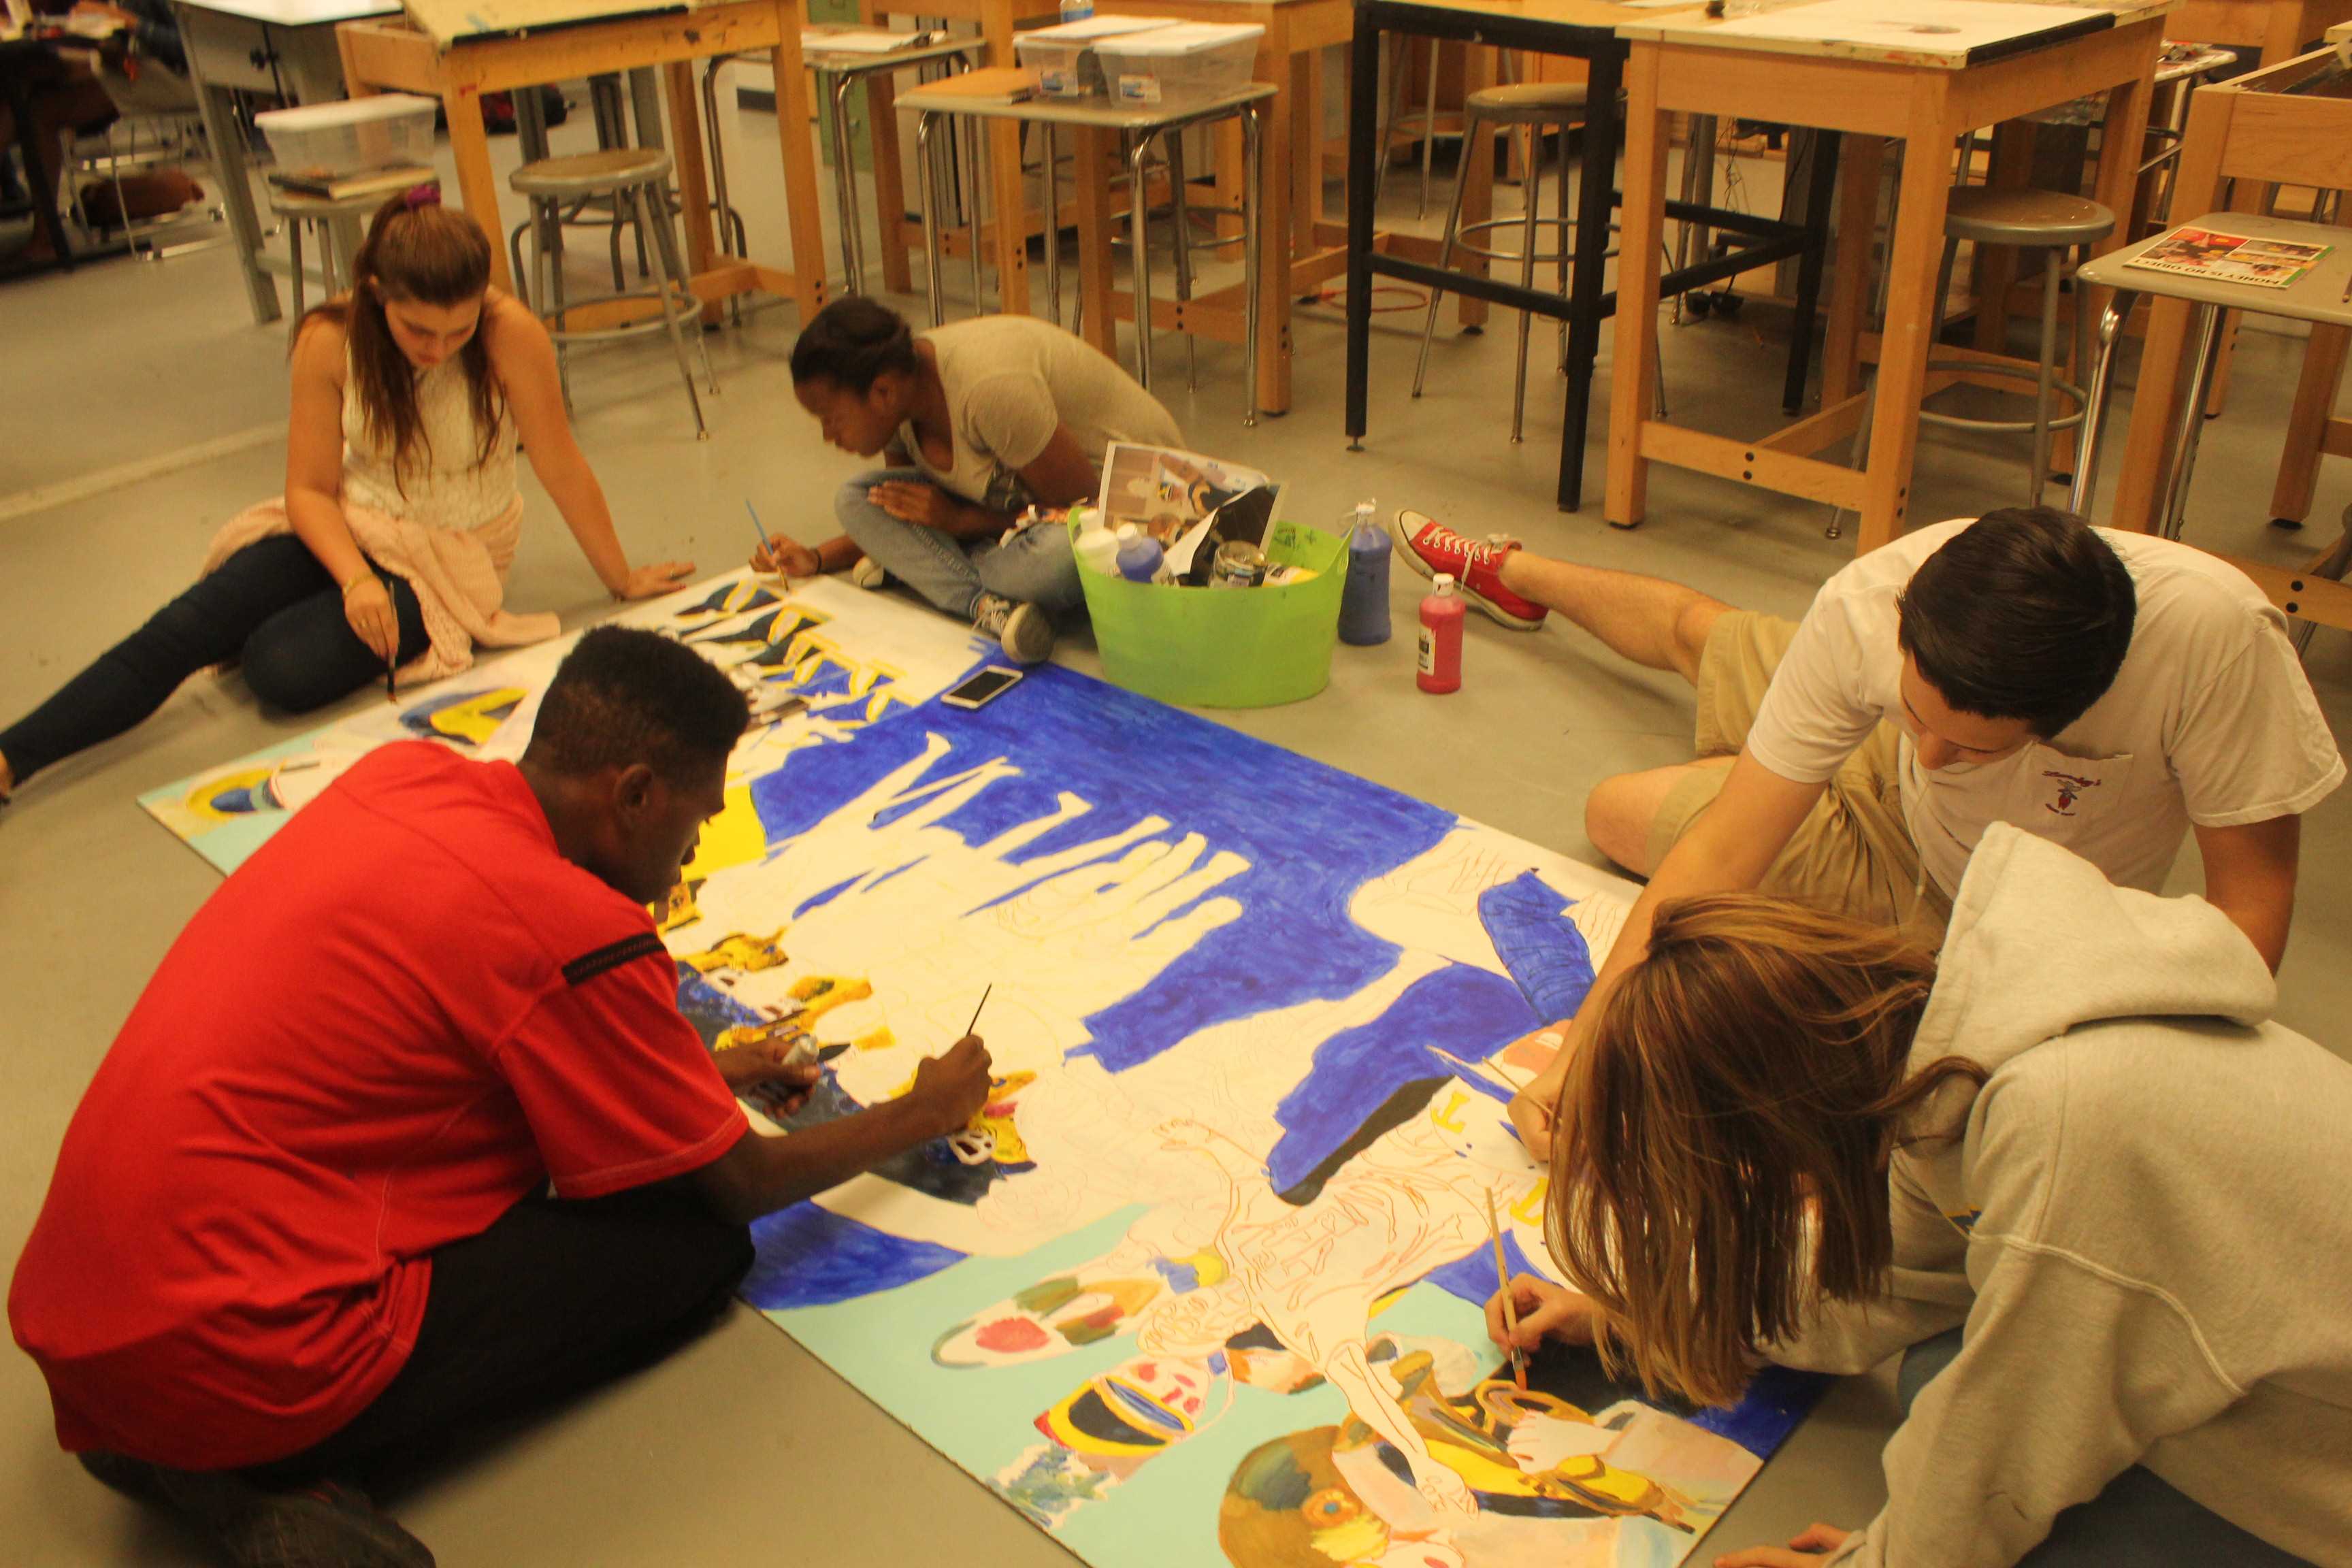 Tupelo+High+art+students+paint+mural+to+show+school+spirit